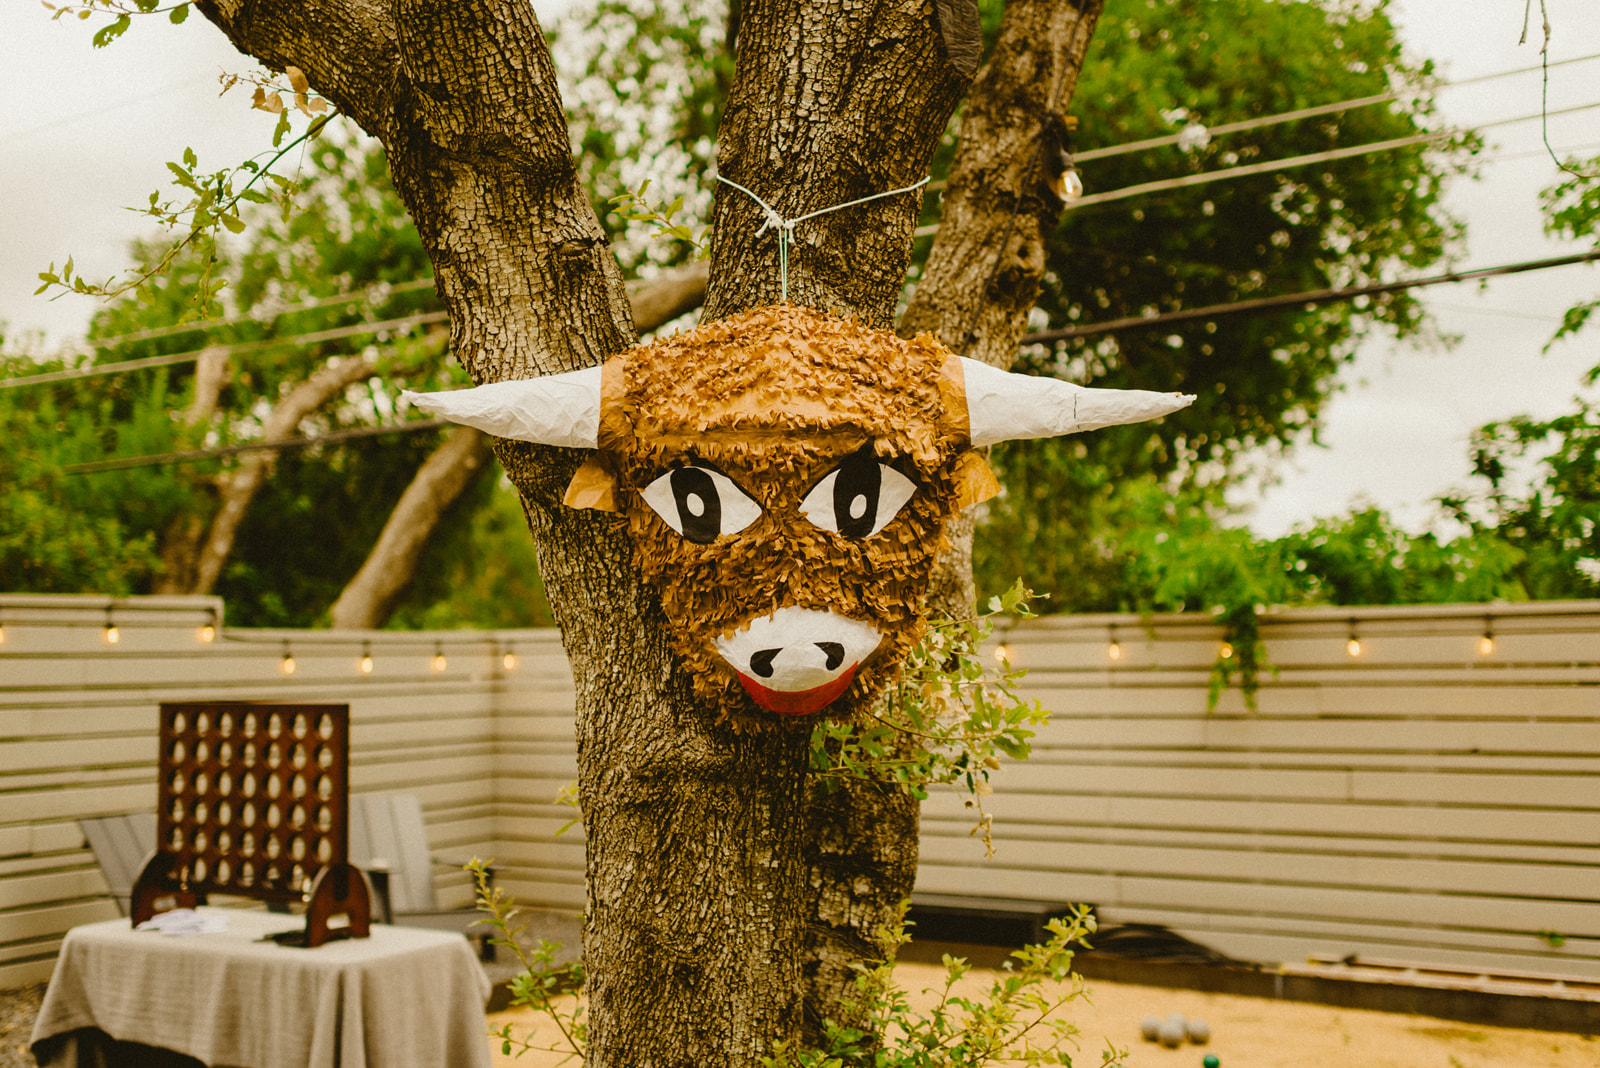 Fiesta Themed Backyard Wedding